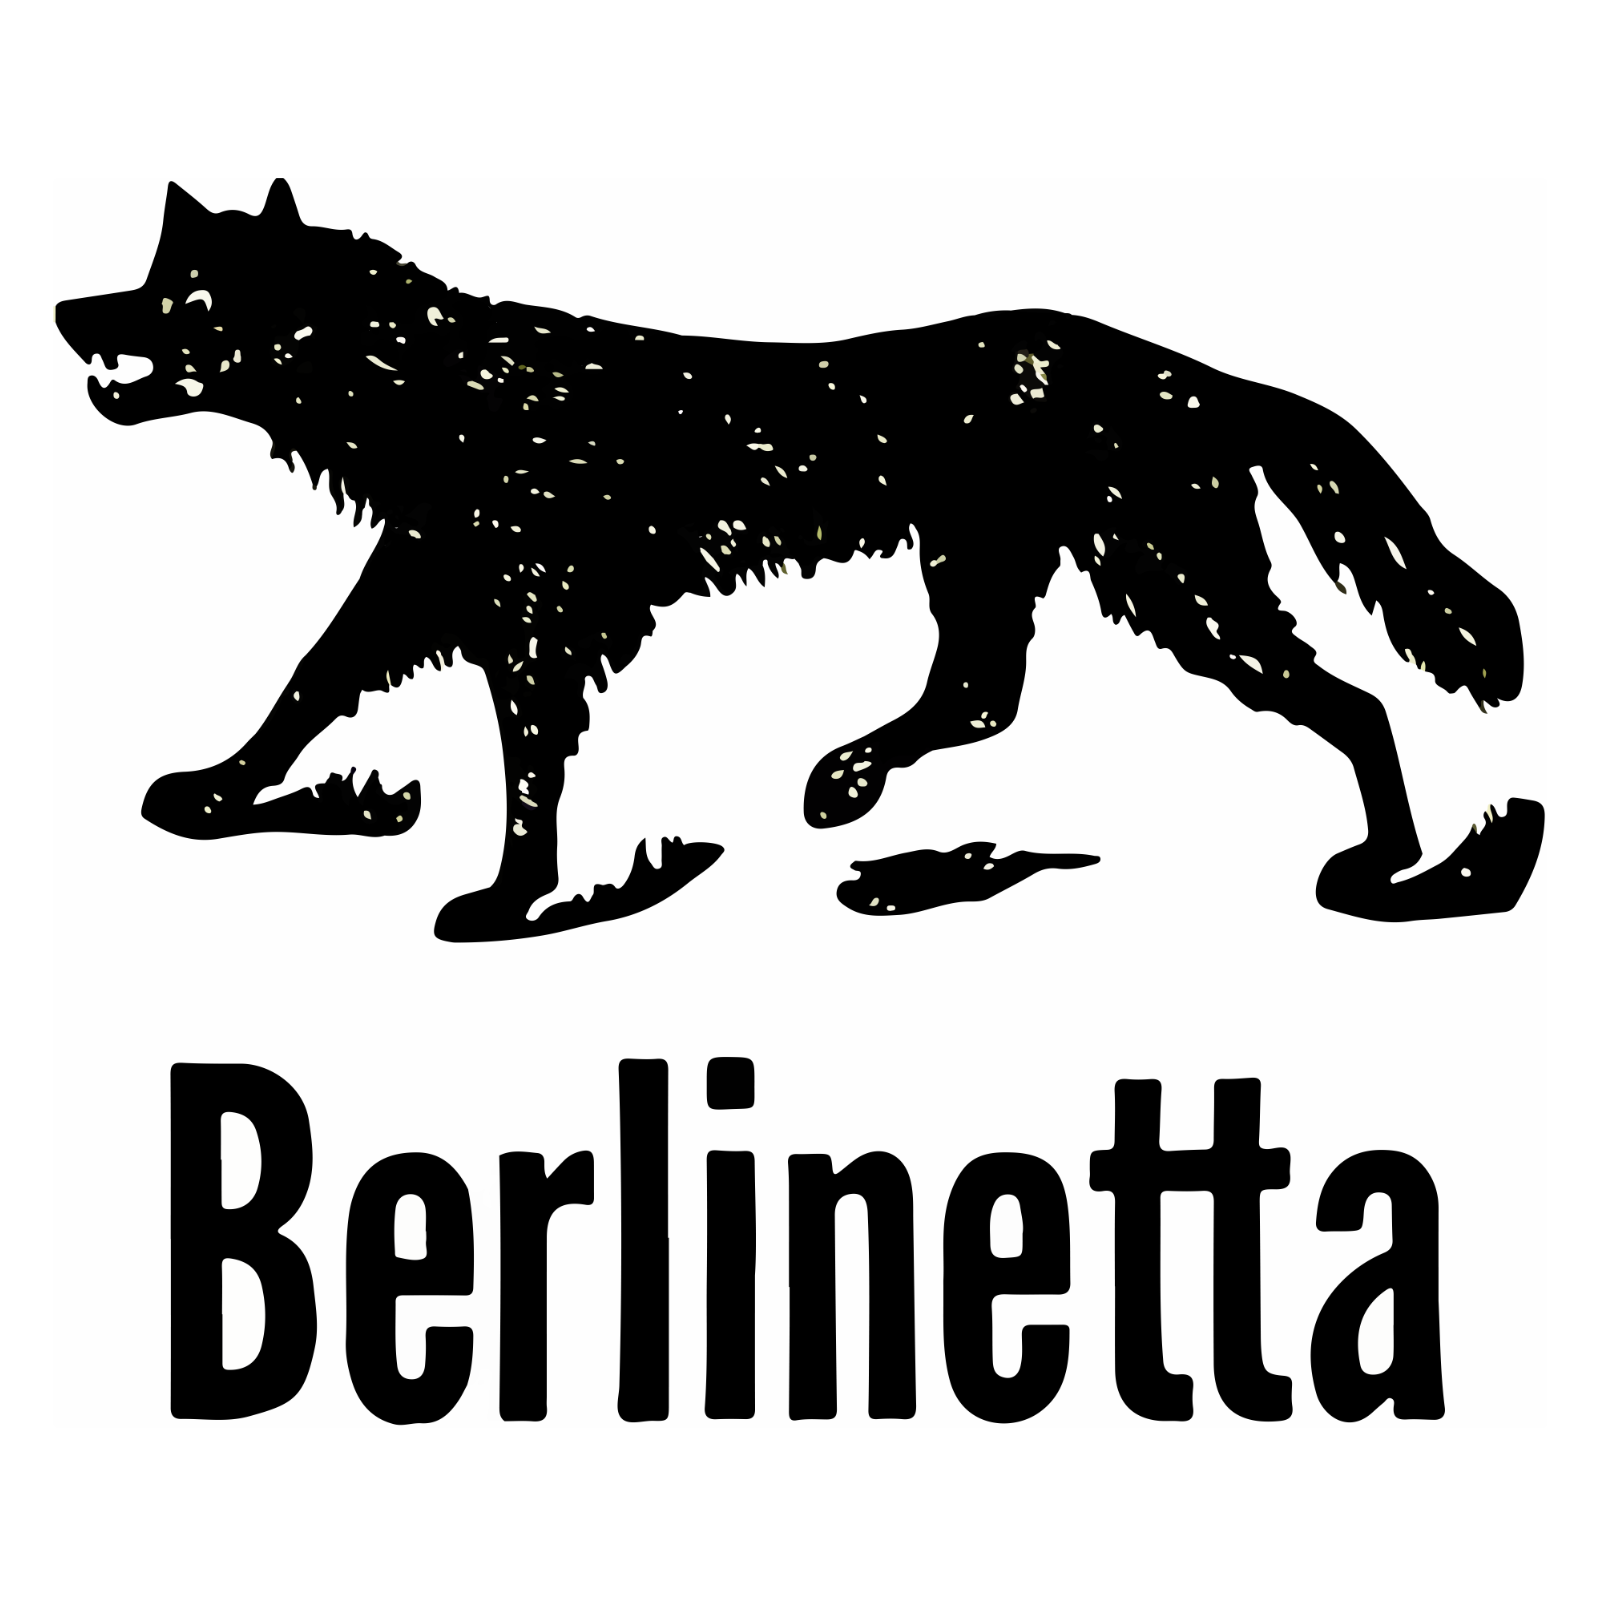 Berlinetta.png